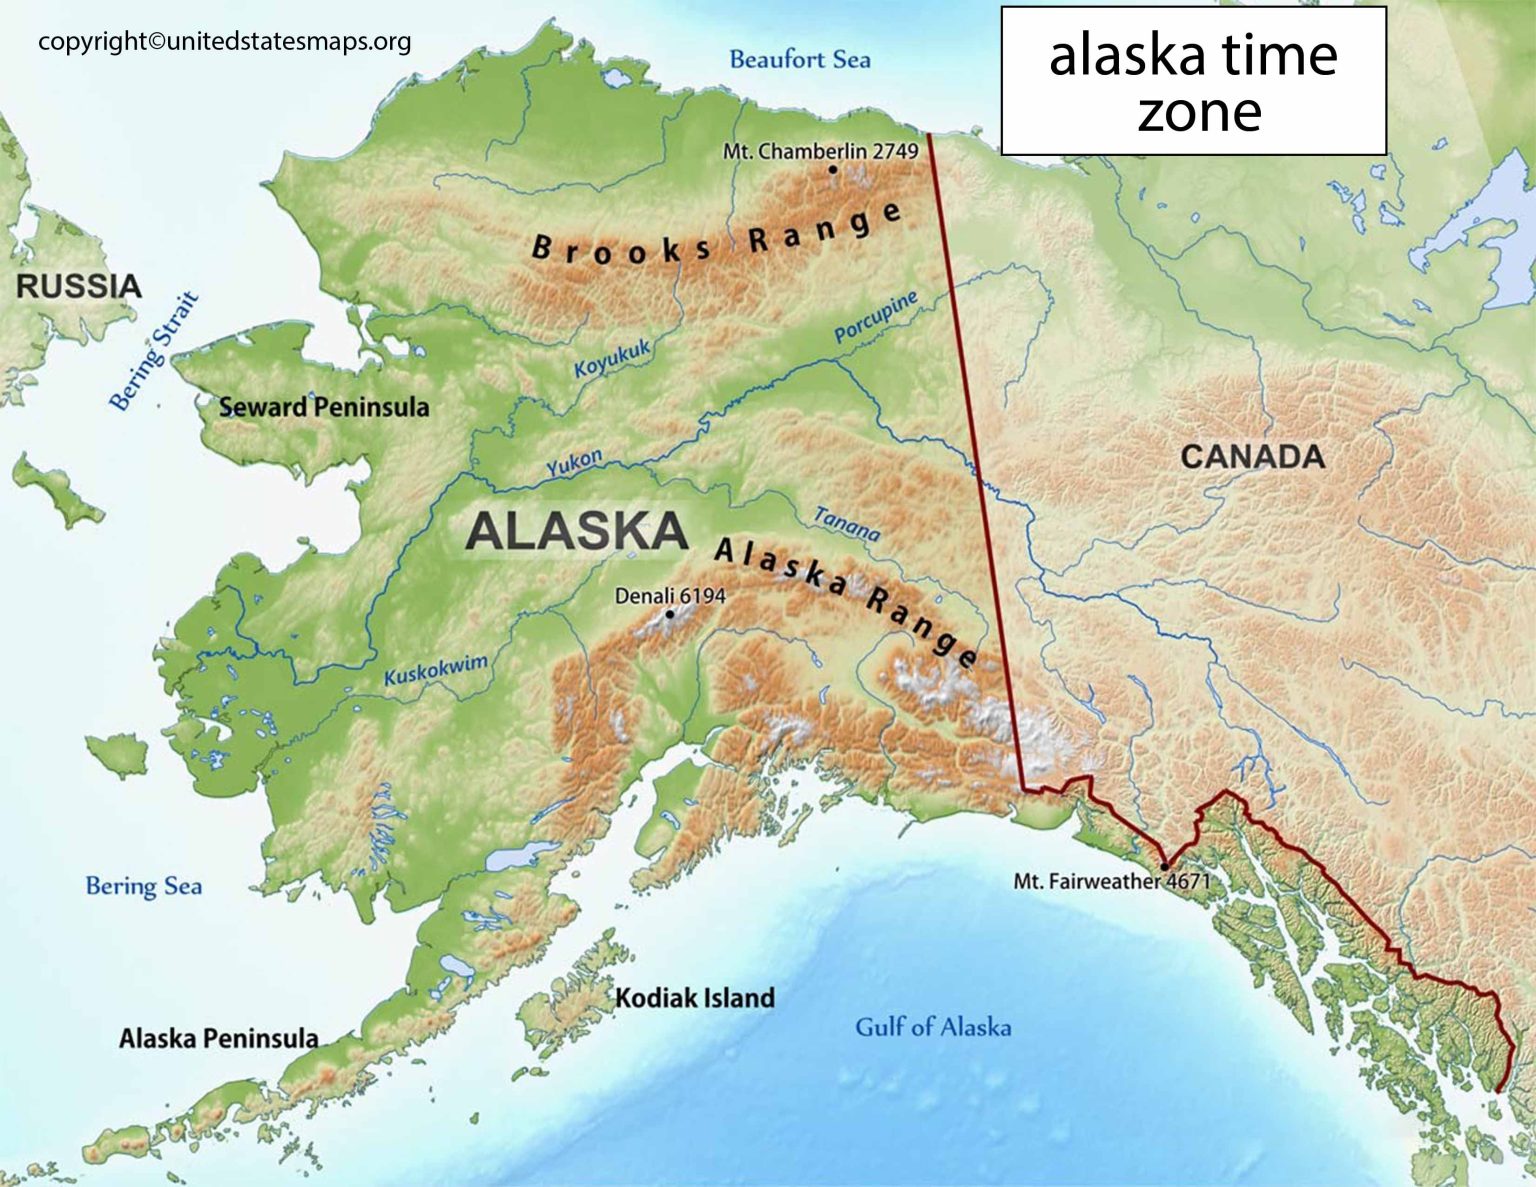 alaska cruise time zone